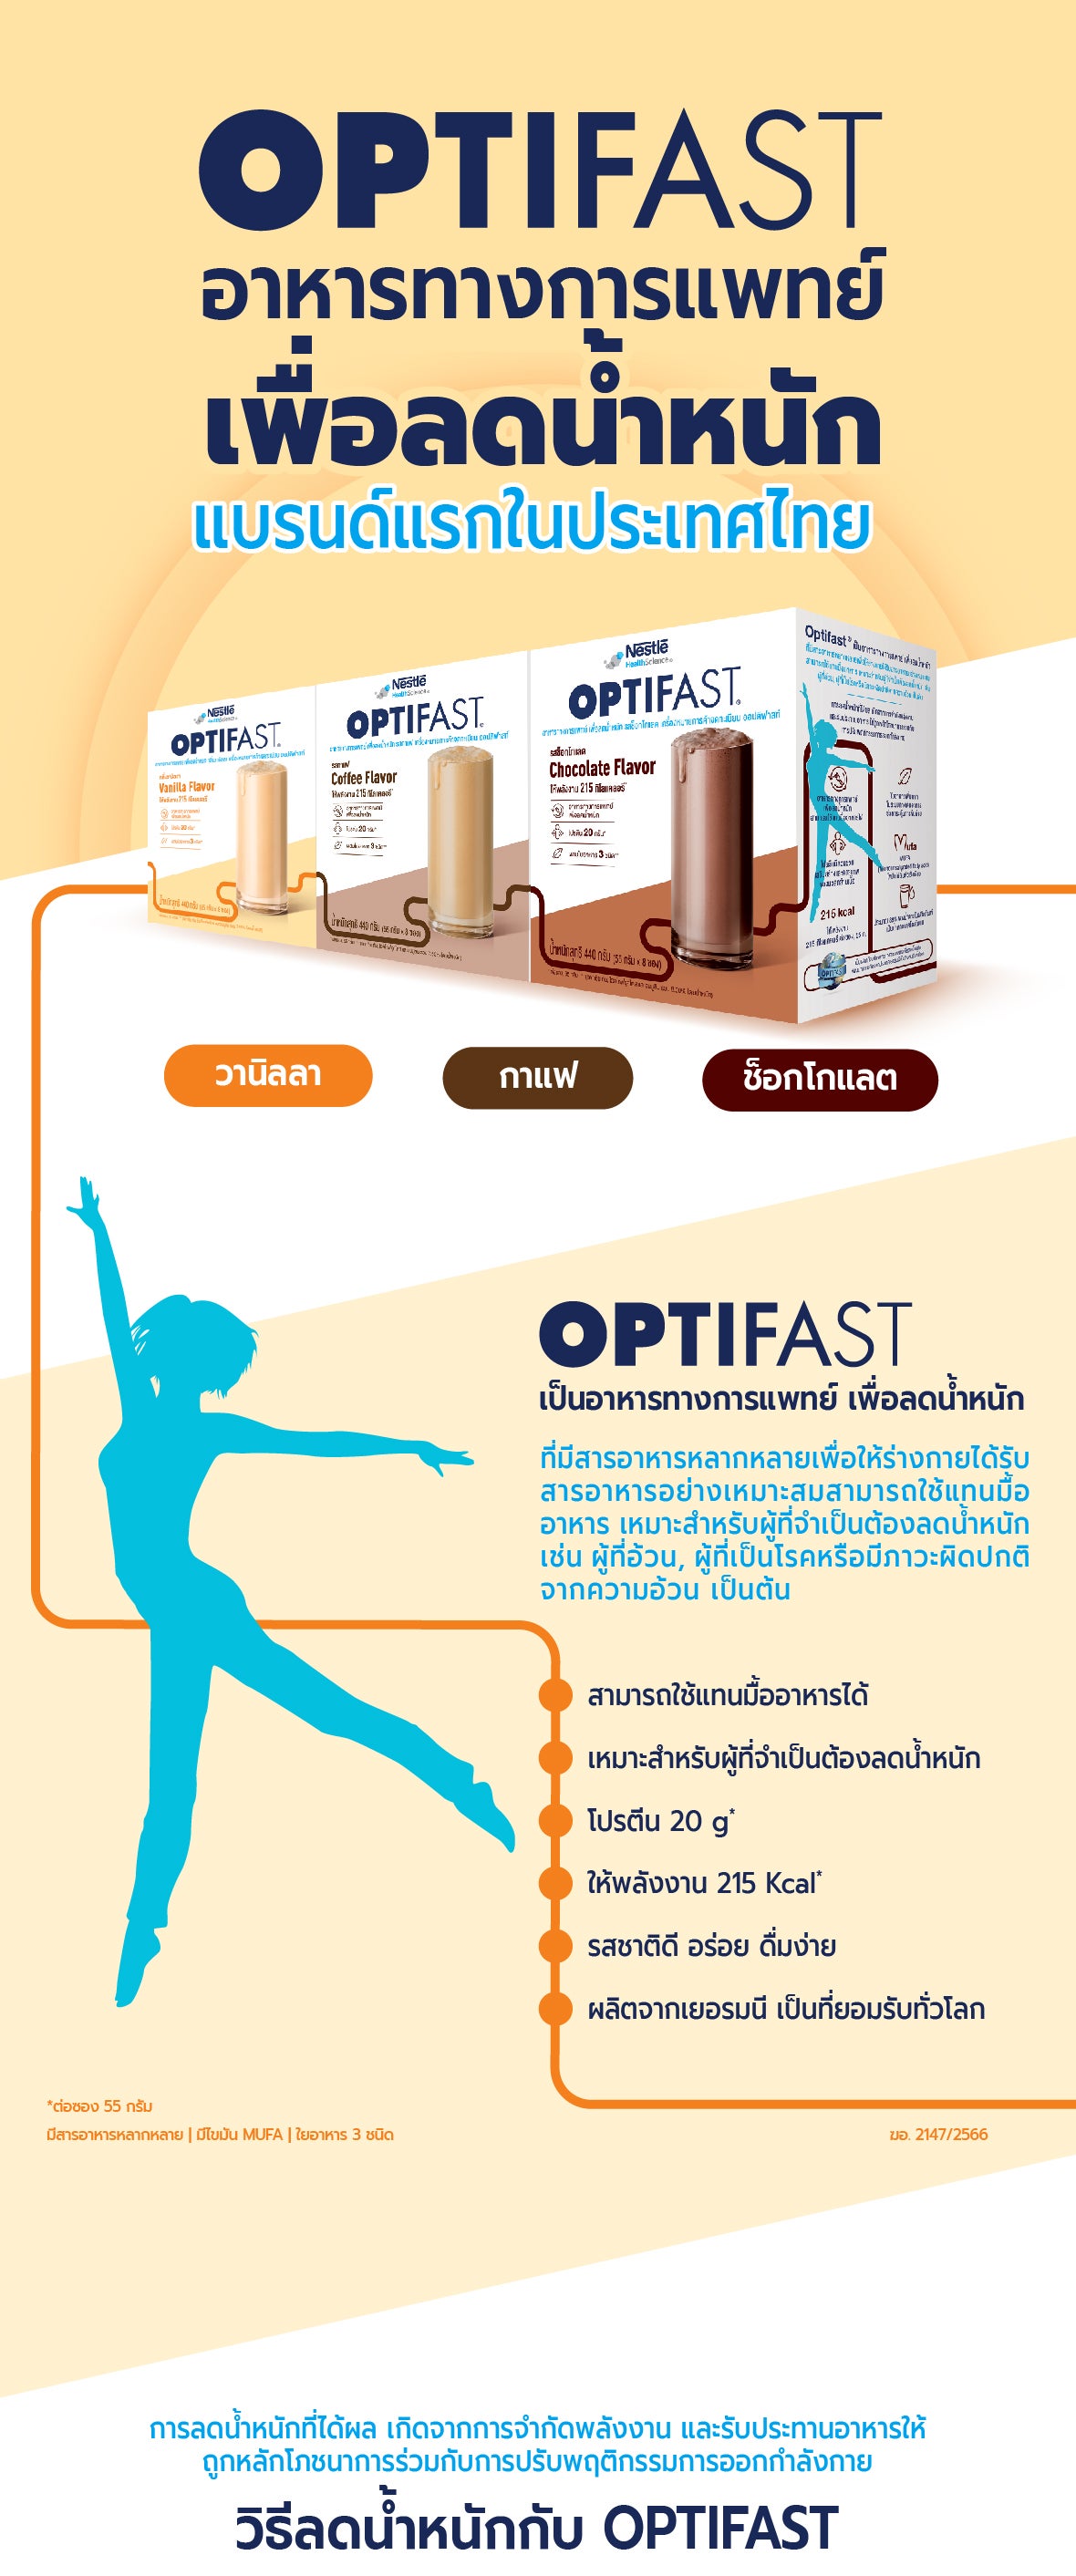 Optifast ออปติฟาสต์ อาหารทางการแพทย์เพื่อลดน้ำหนักแบรนด์แรกในประเทศไทย